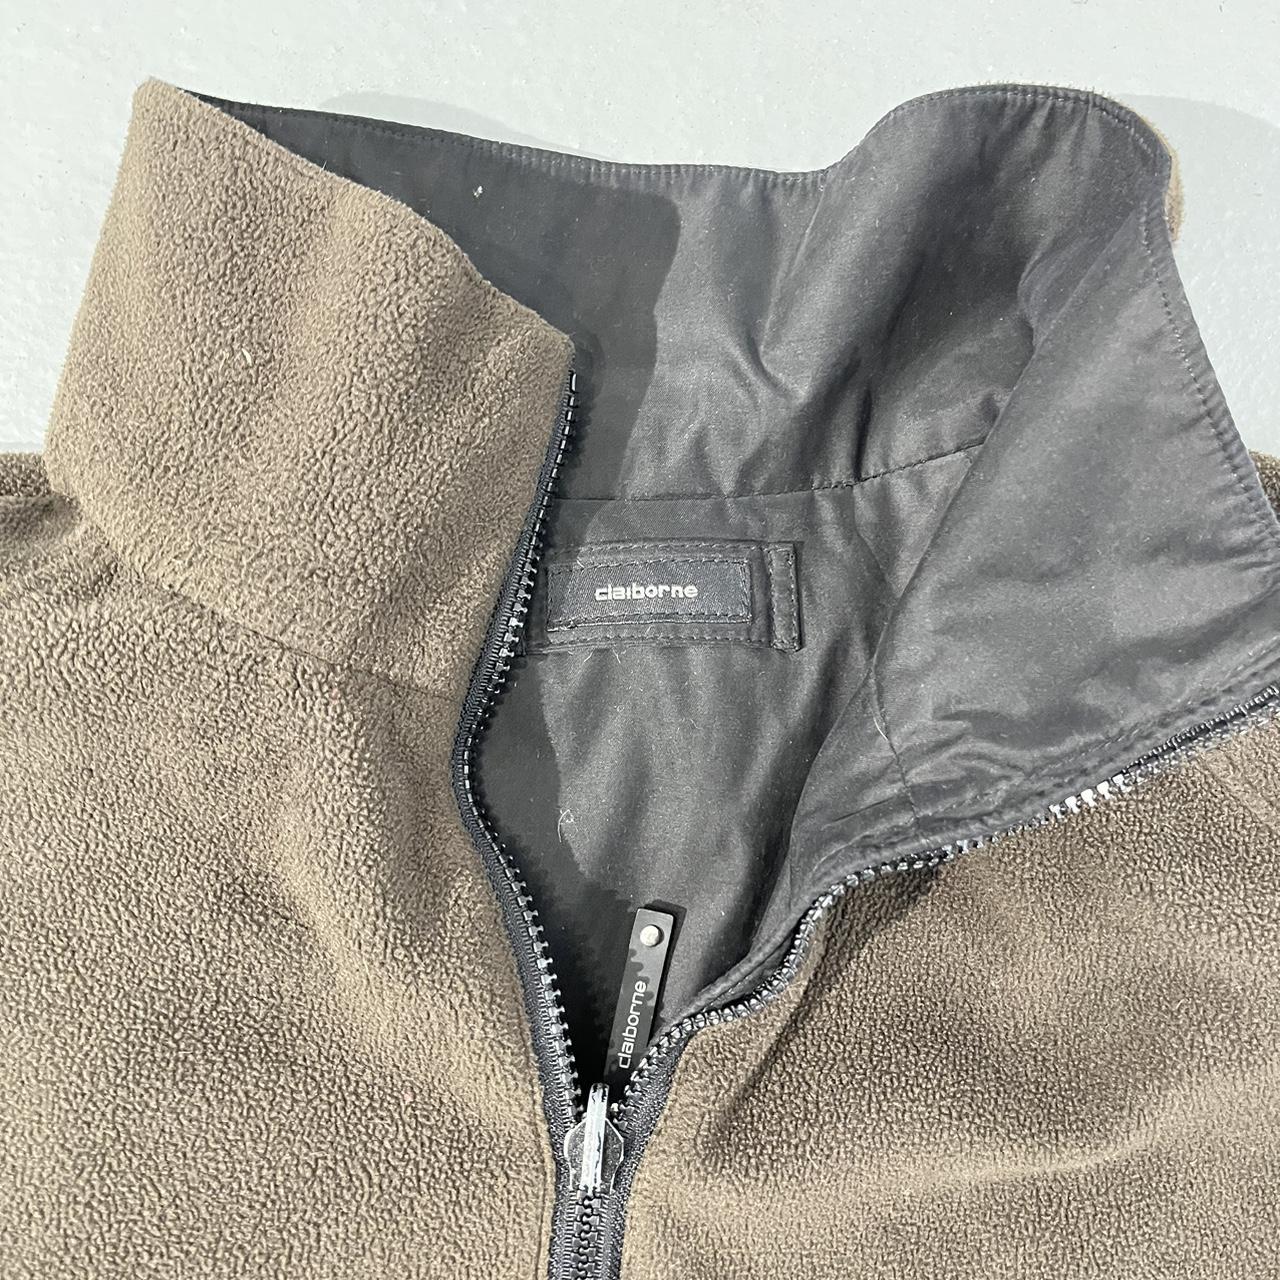 claiborne insulating jacket size... - Depop